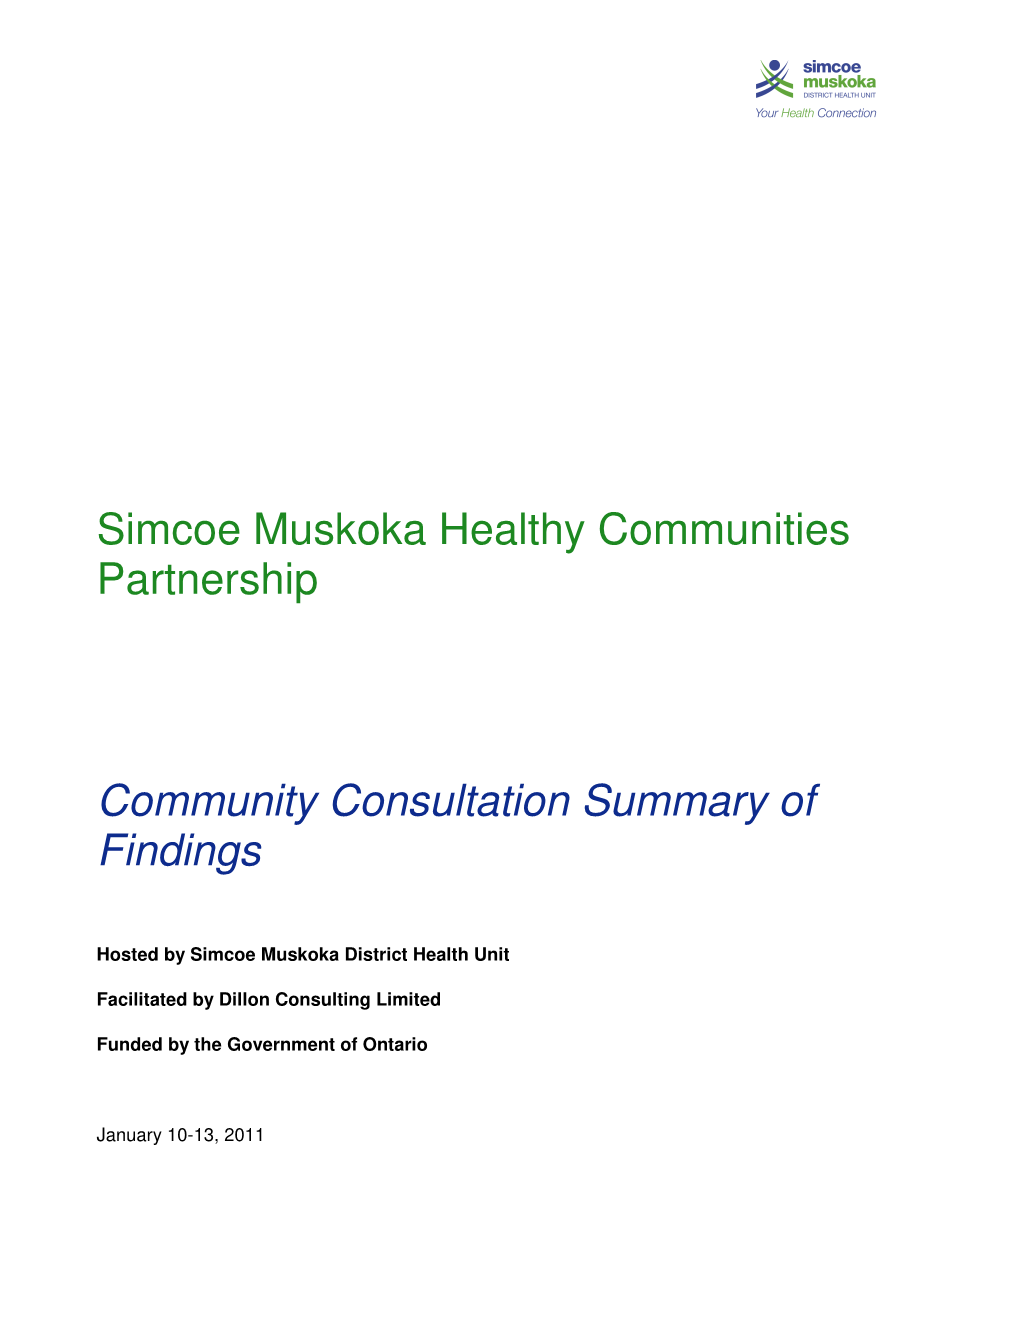 Simcoe Muskoka Healthy Communities Partnership